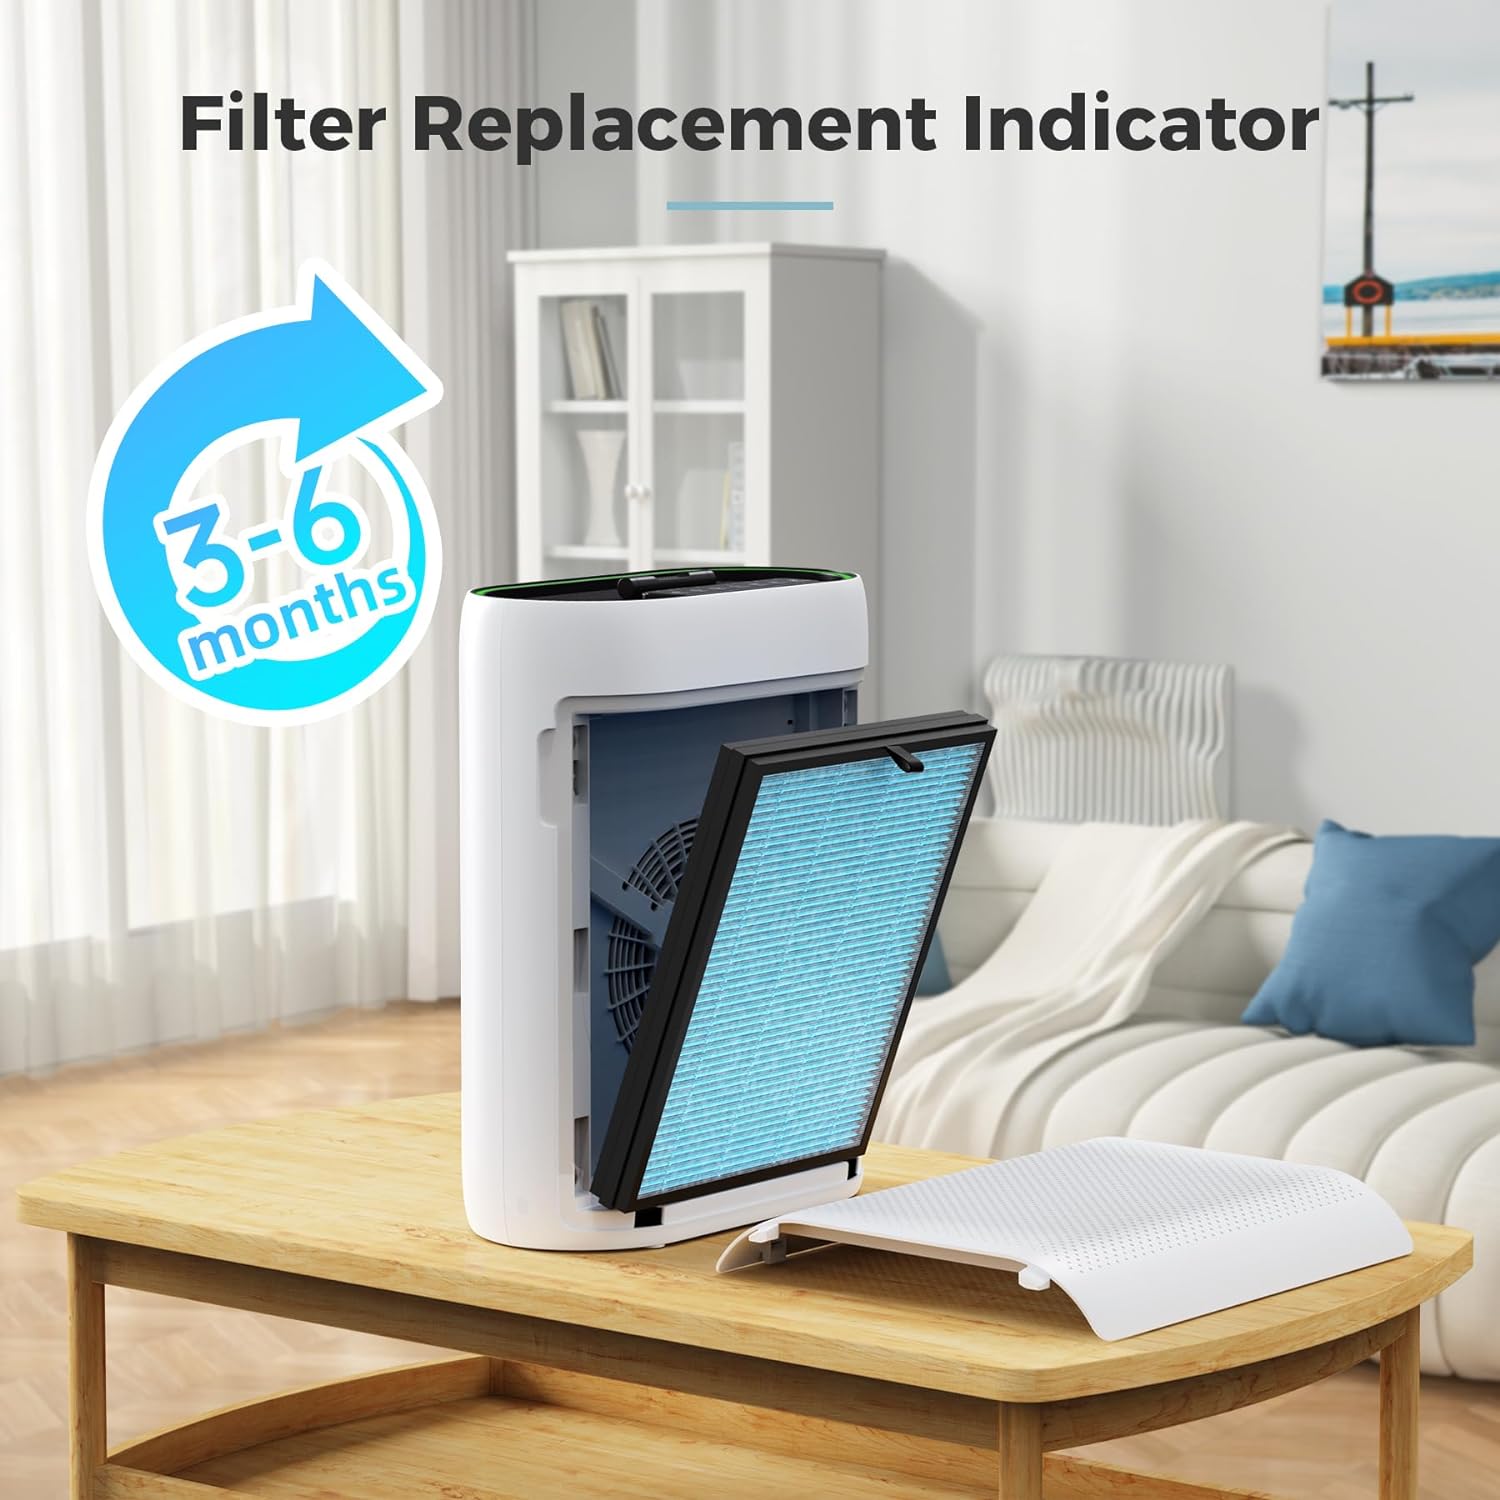 AROEVE Air Filter Replacement | MKD05- Standard Version